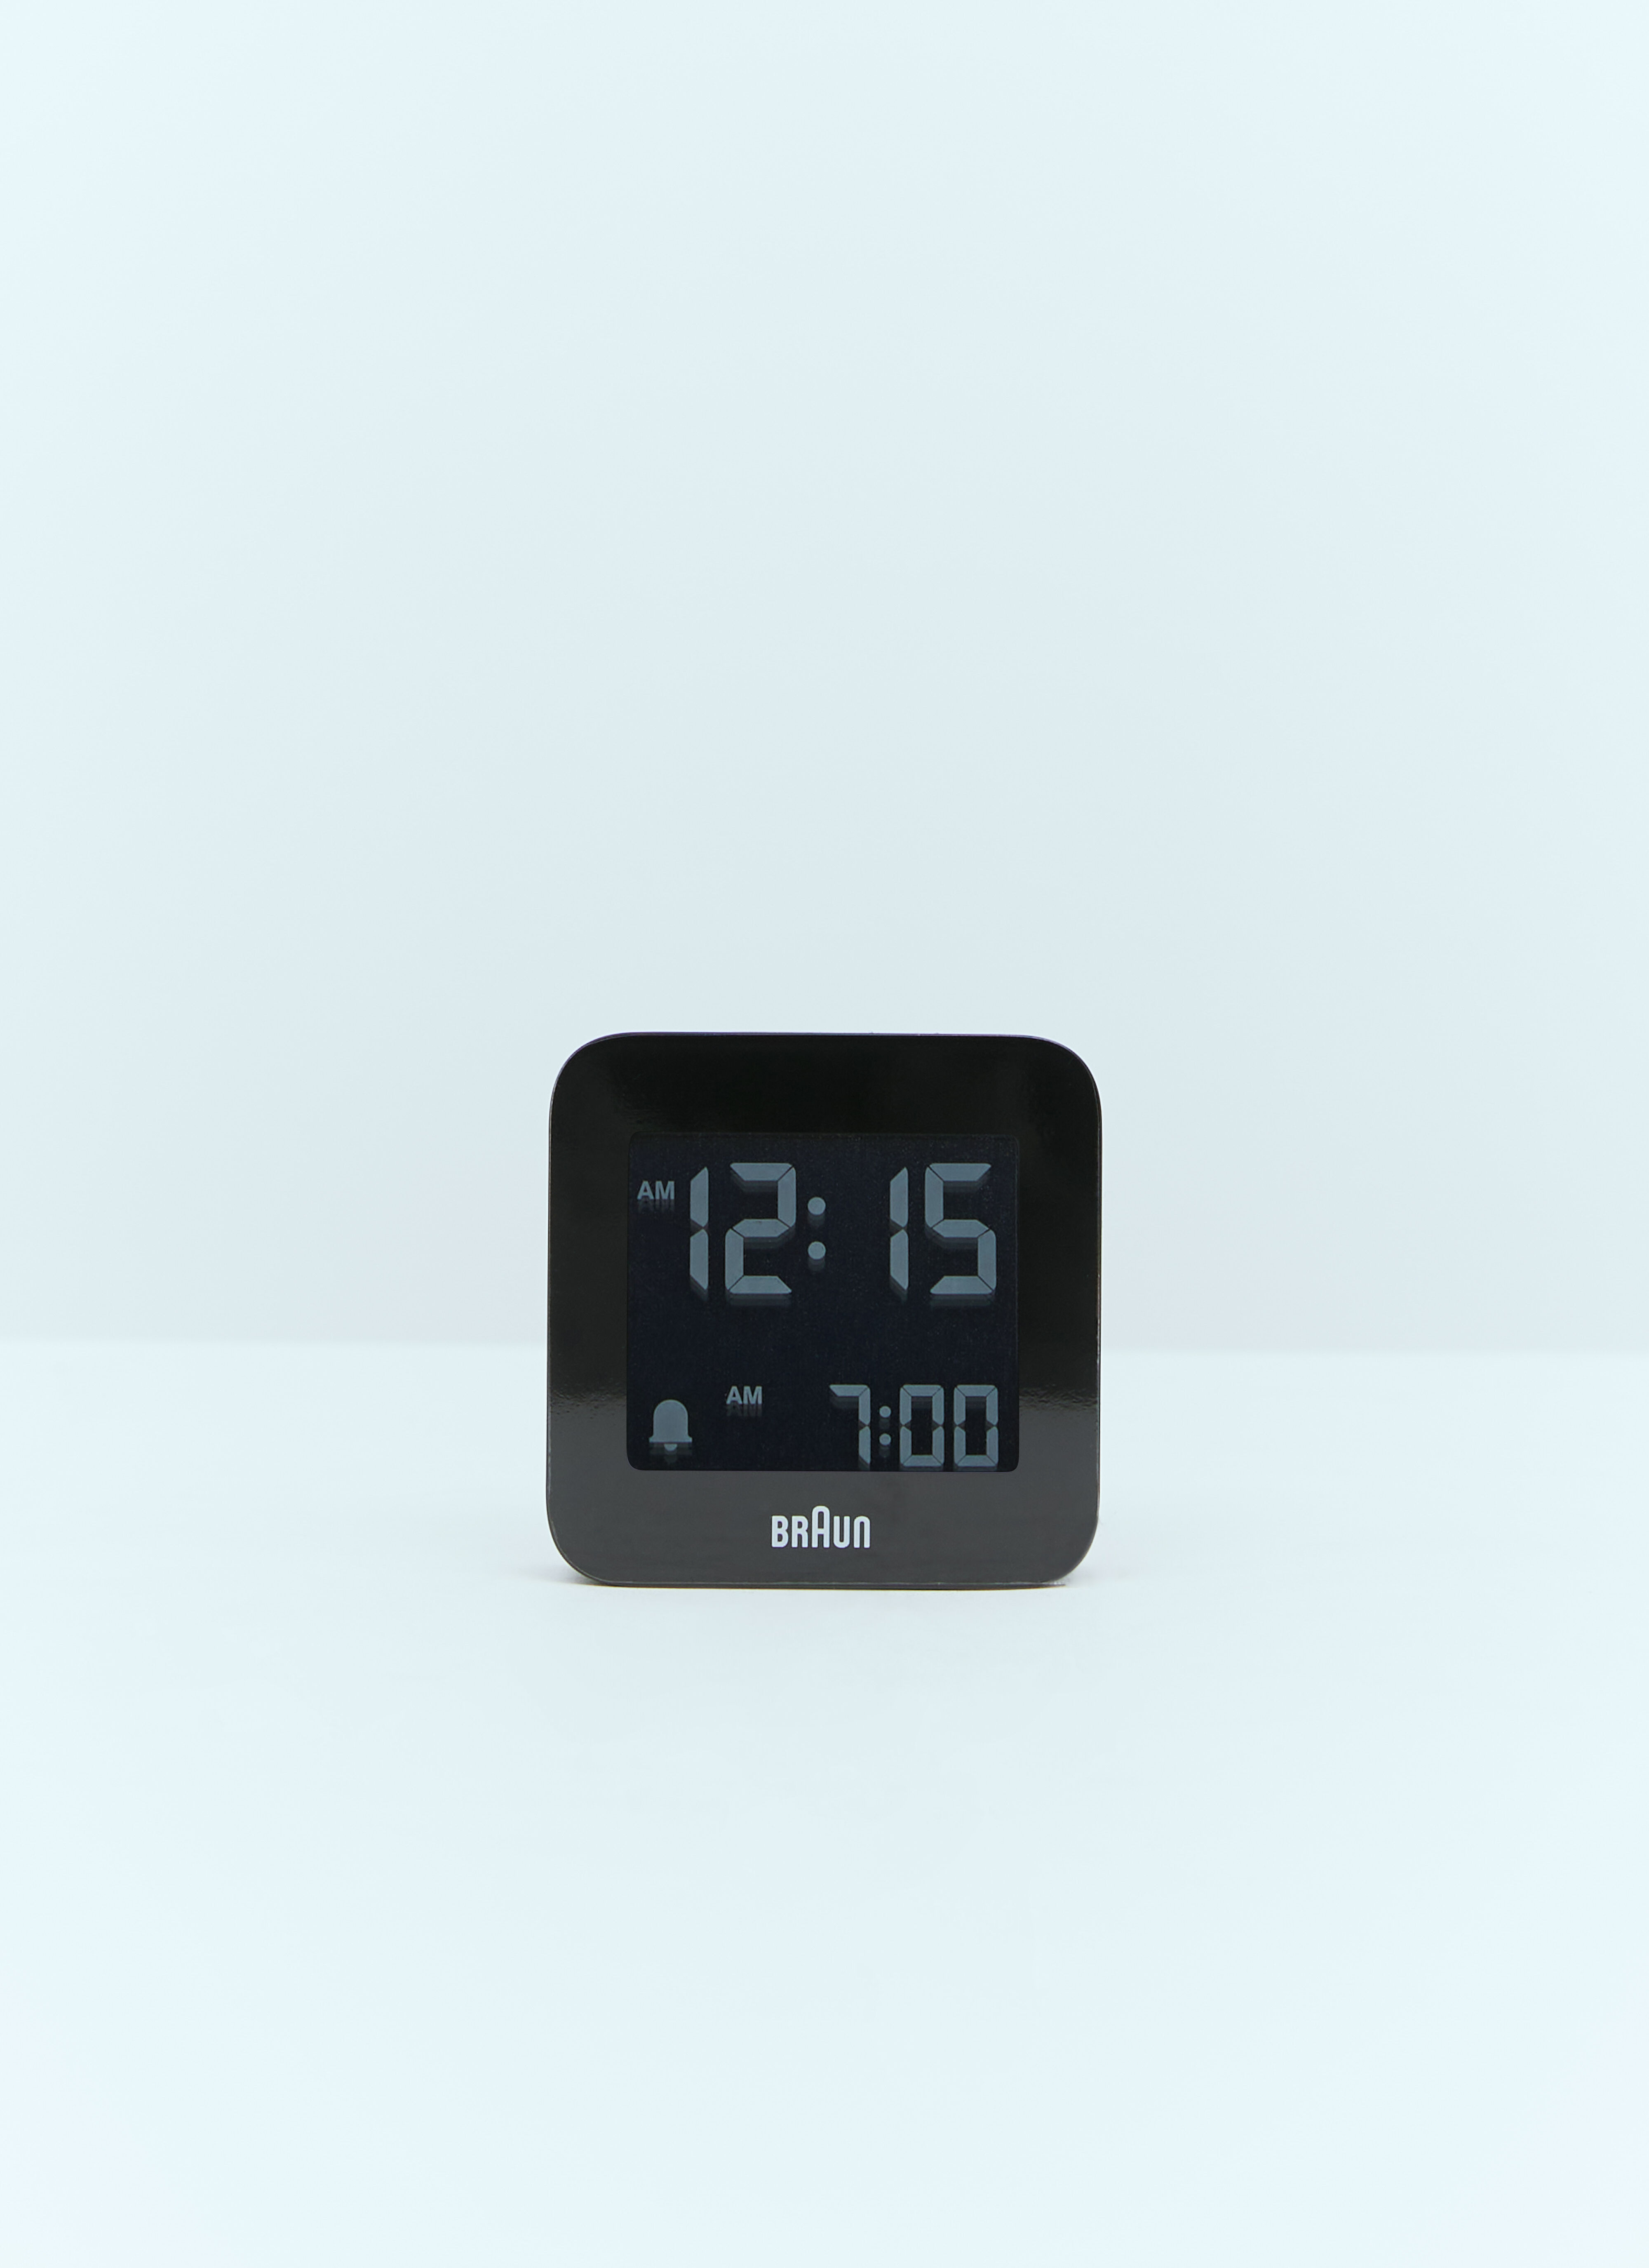 Bordallo Pinheiro BC08 Digital Travel Alarm Clock Blue wps0691192